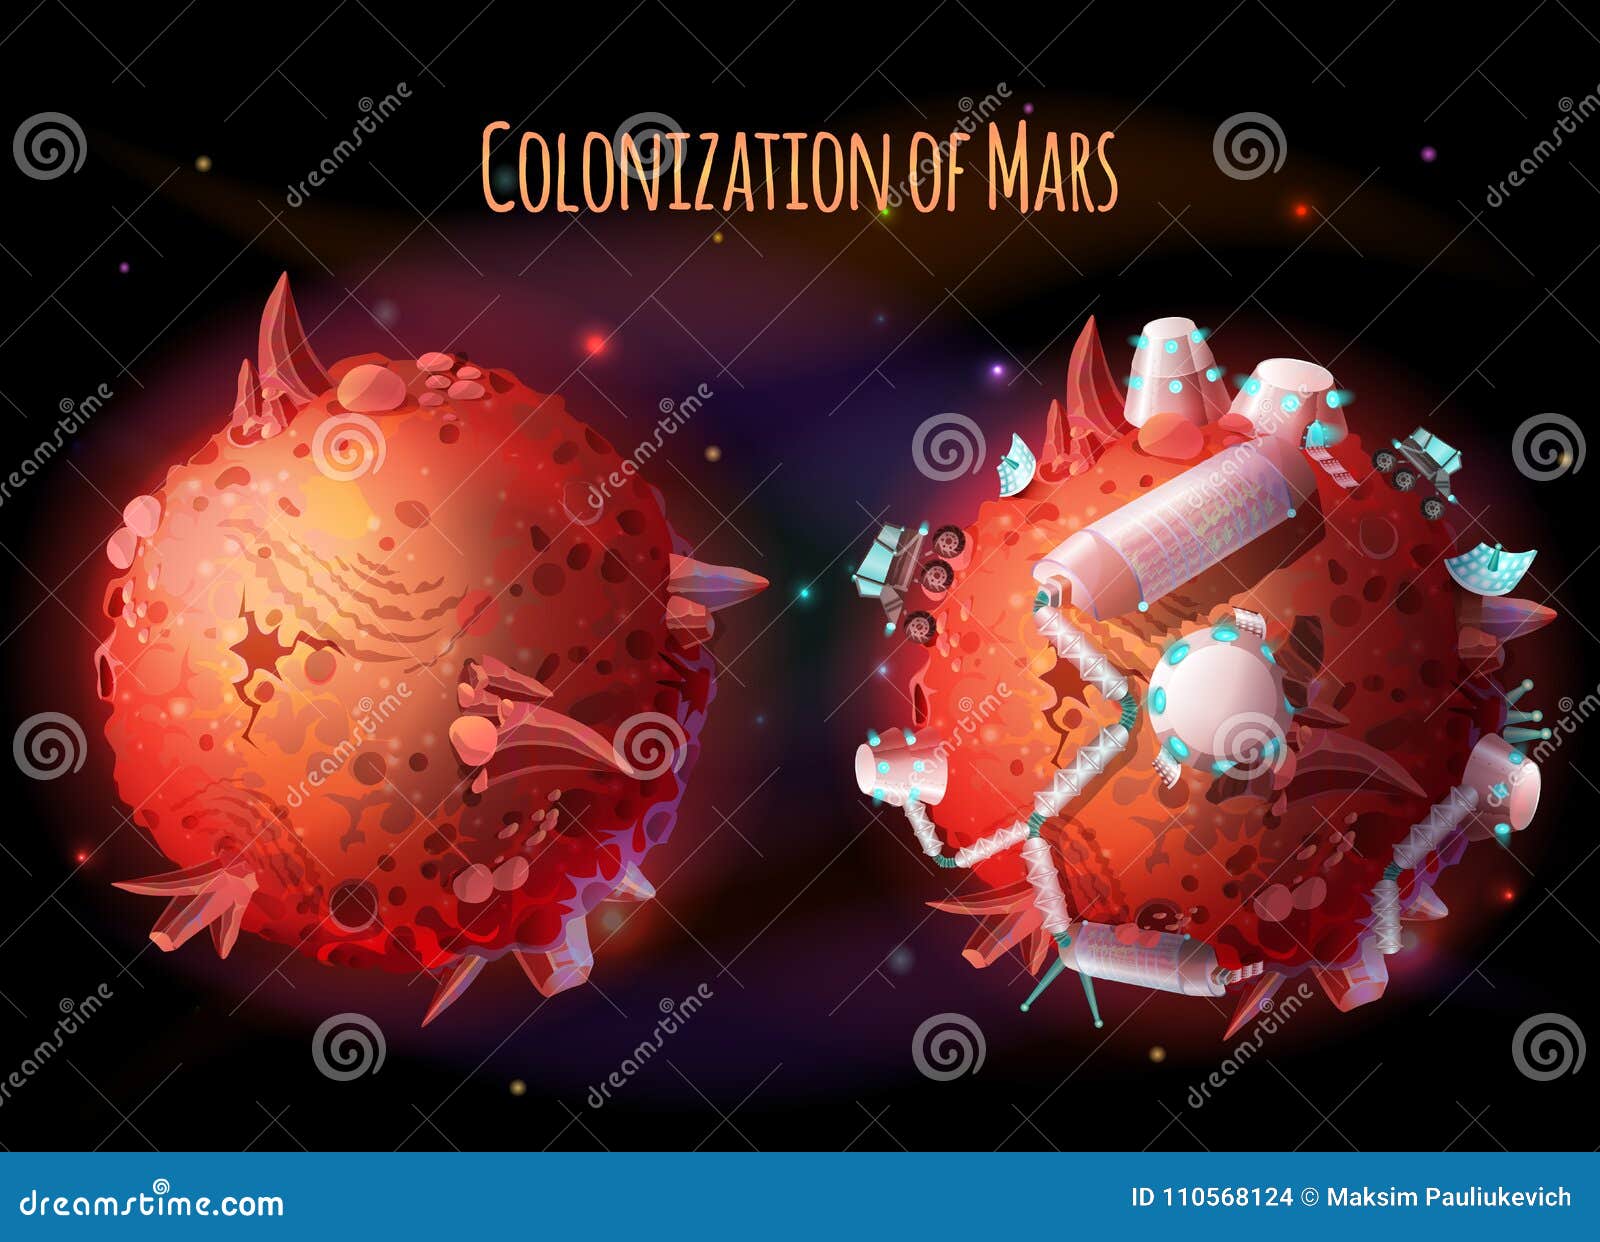 colonization of mars  concept 